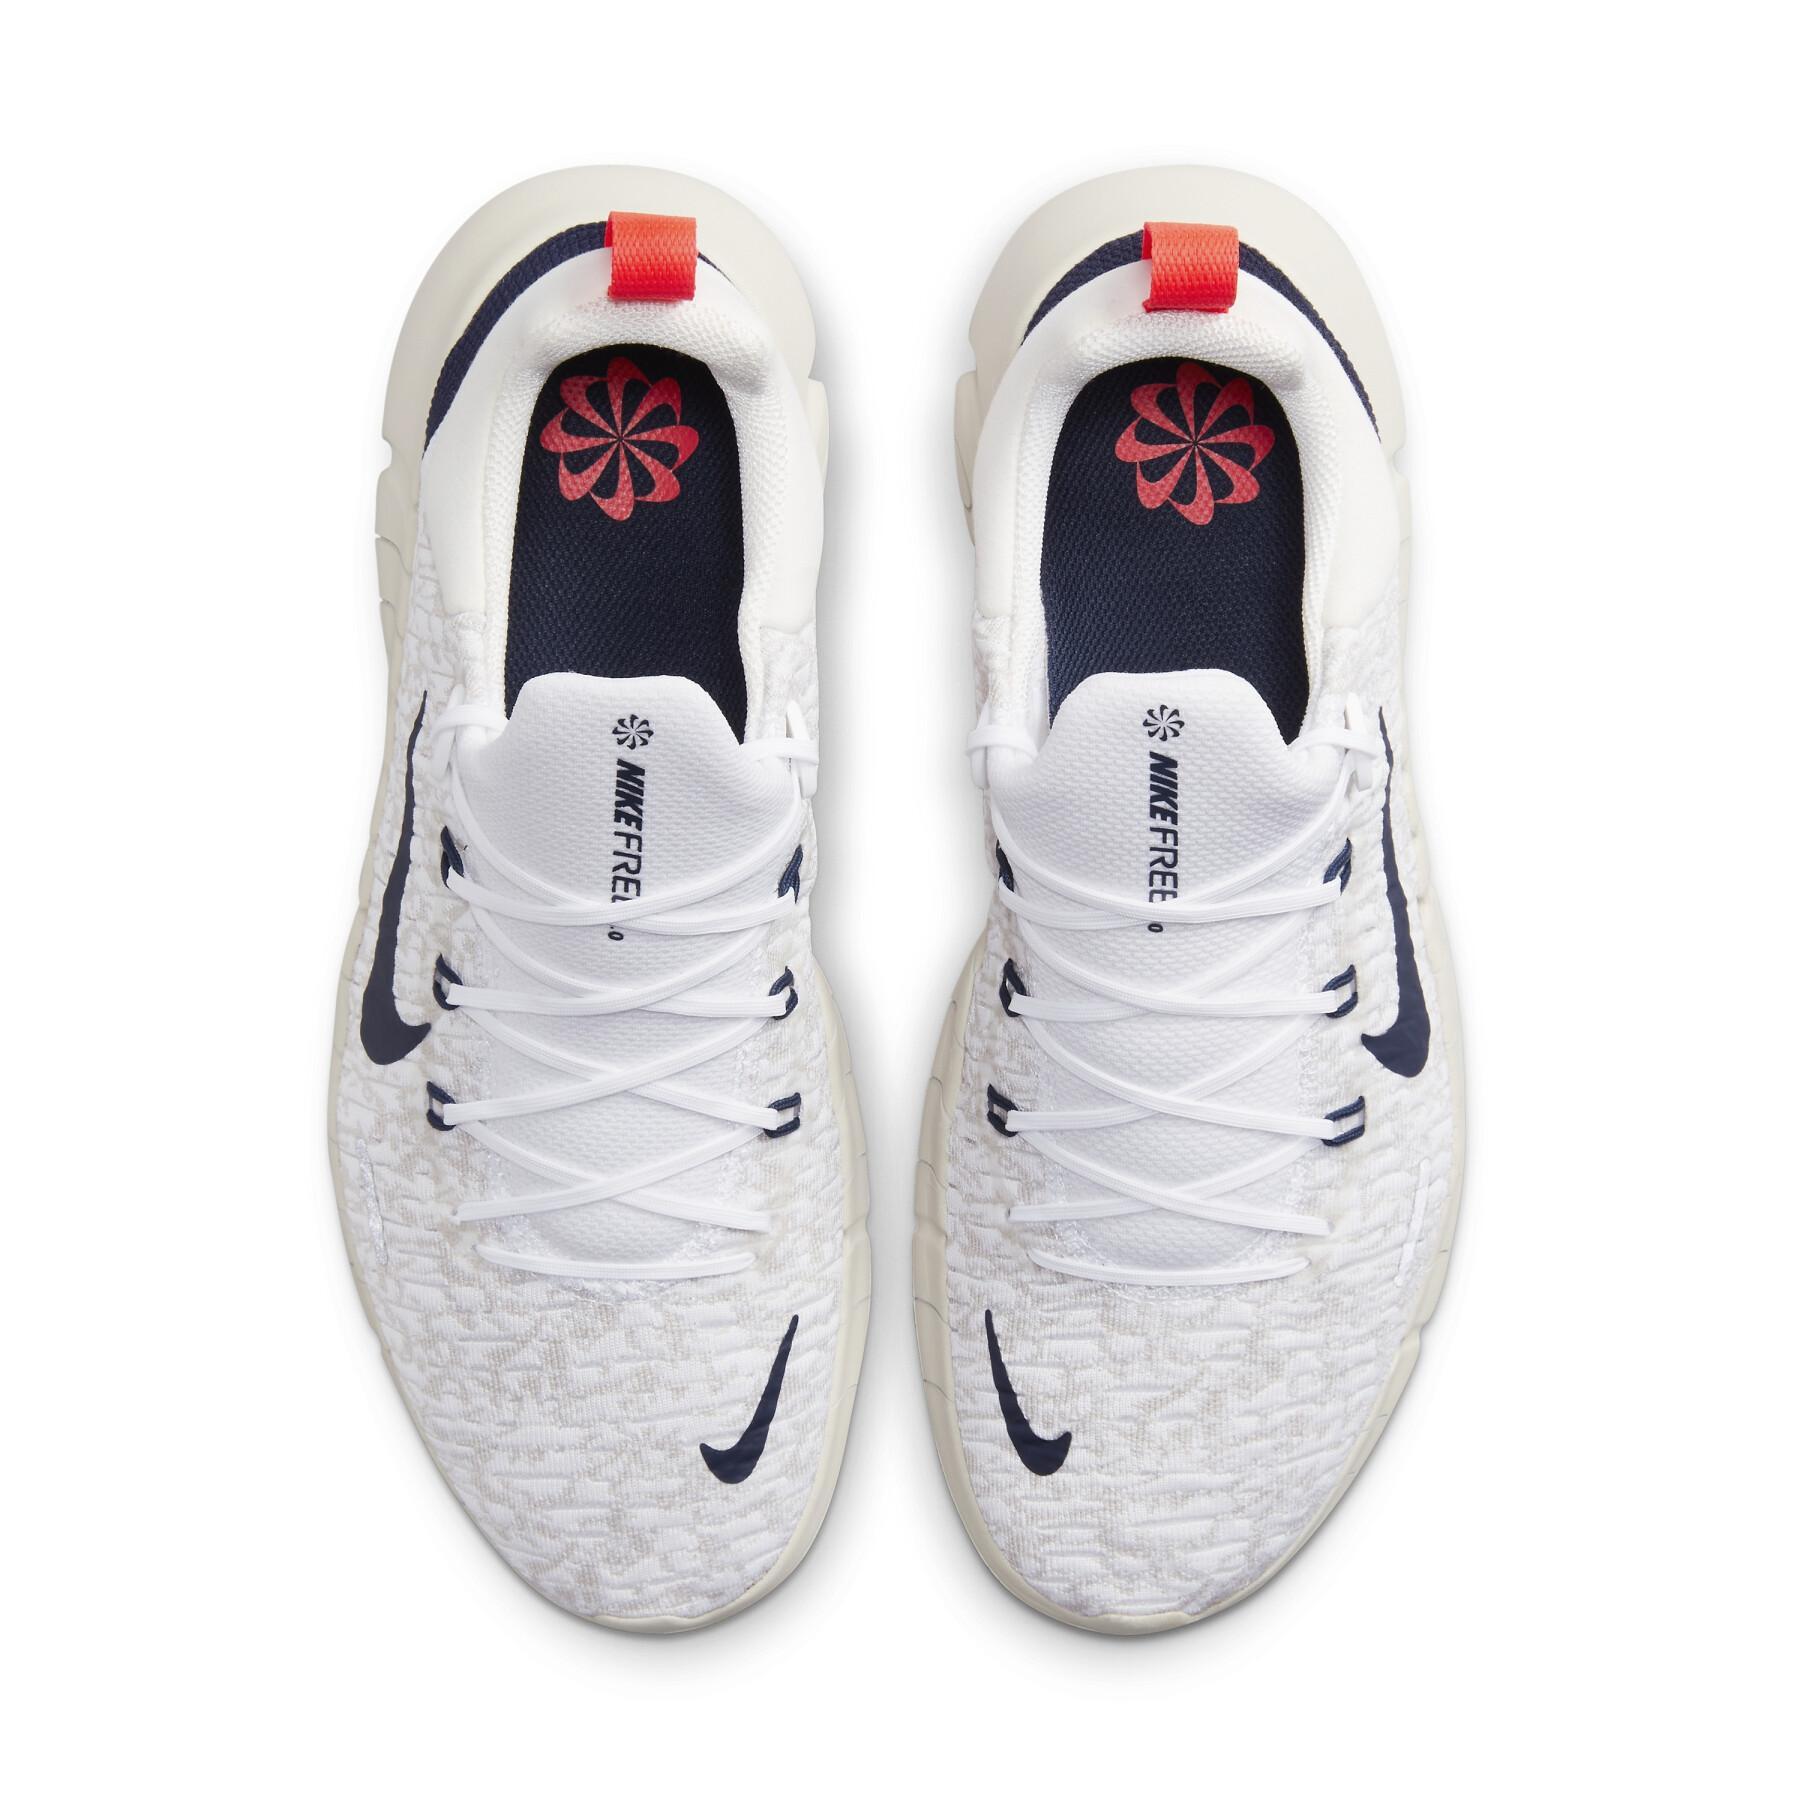 Chaussures de running Nike Free Run 5.0